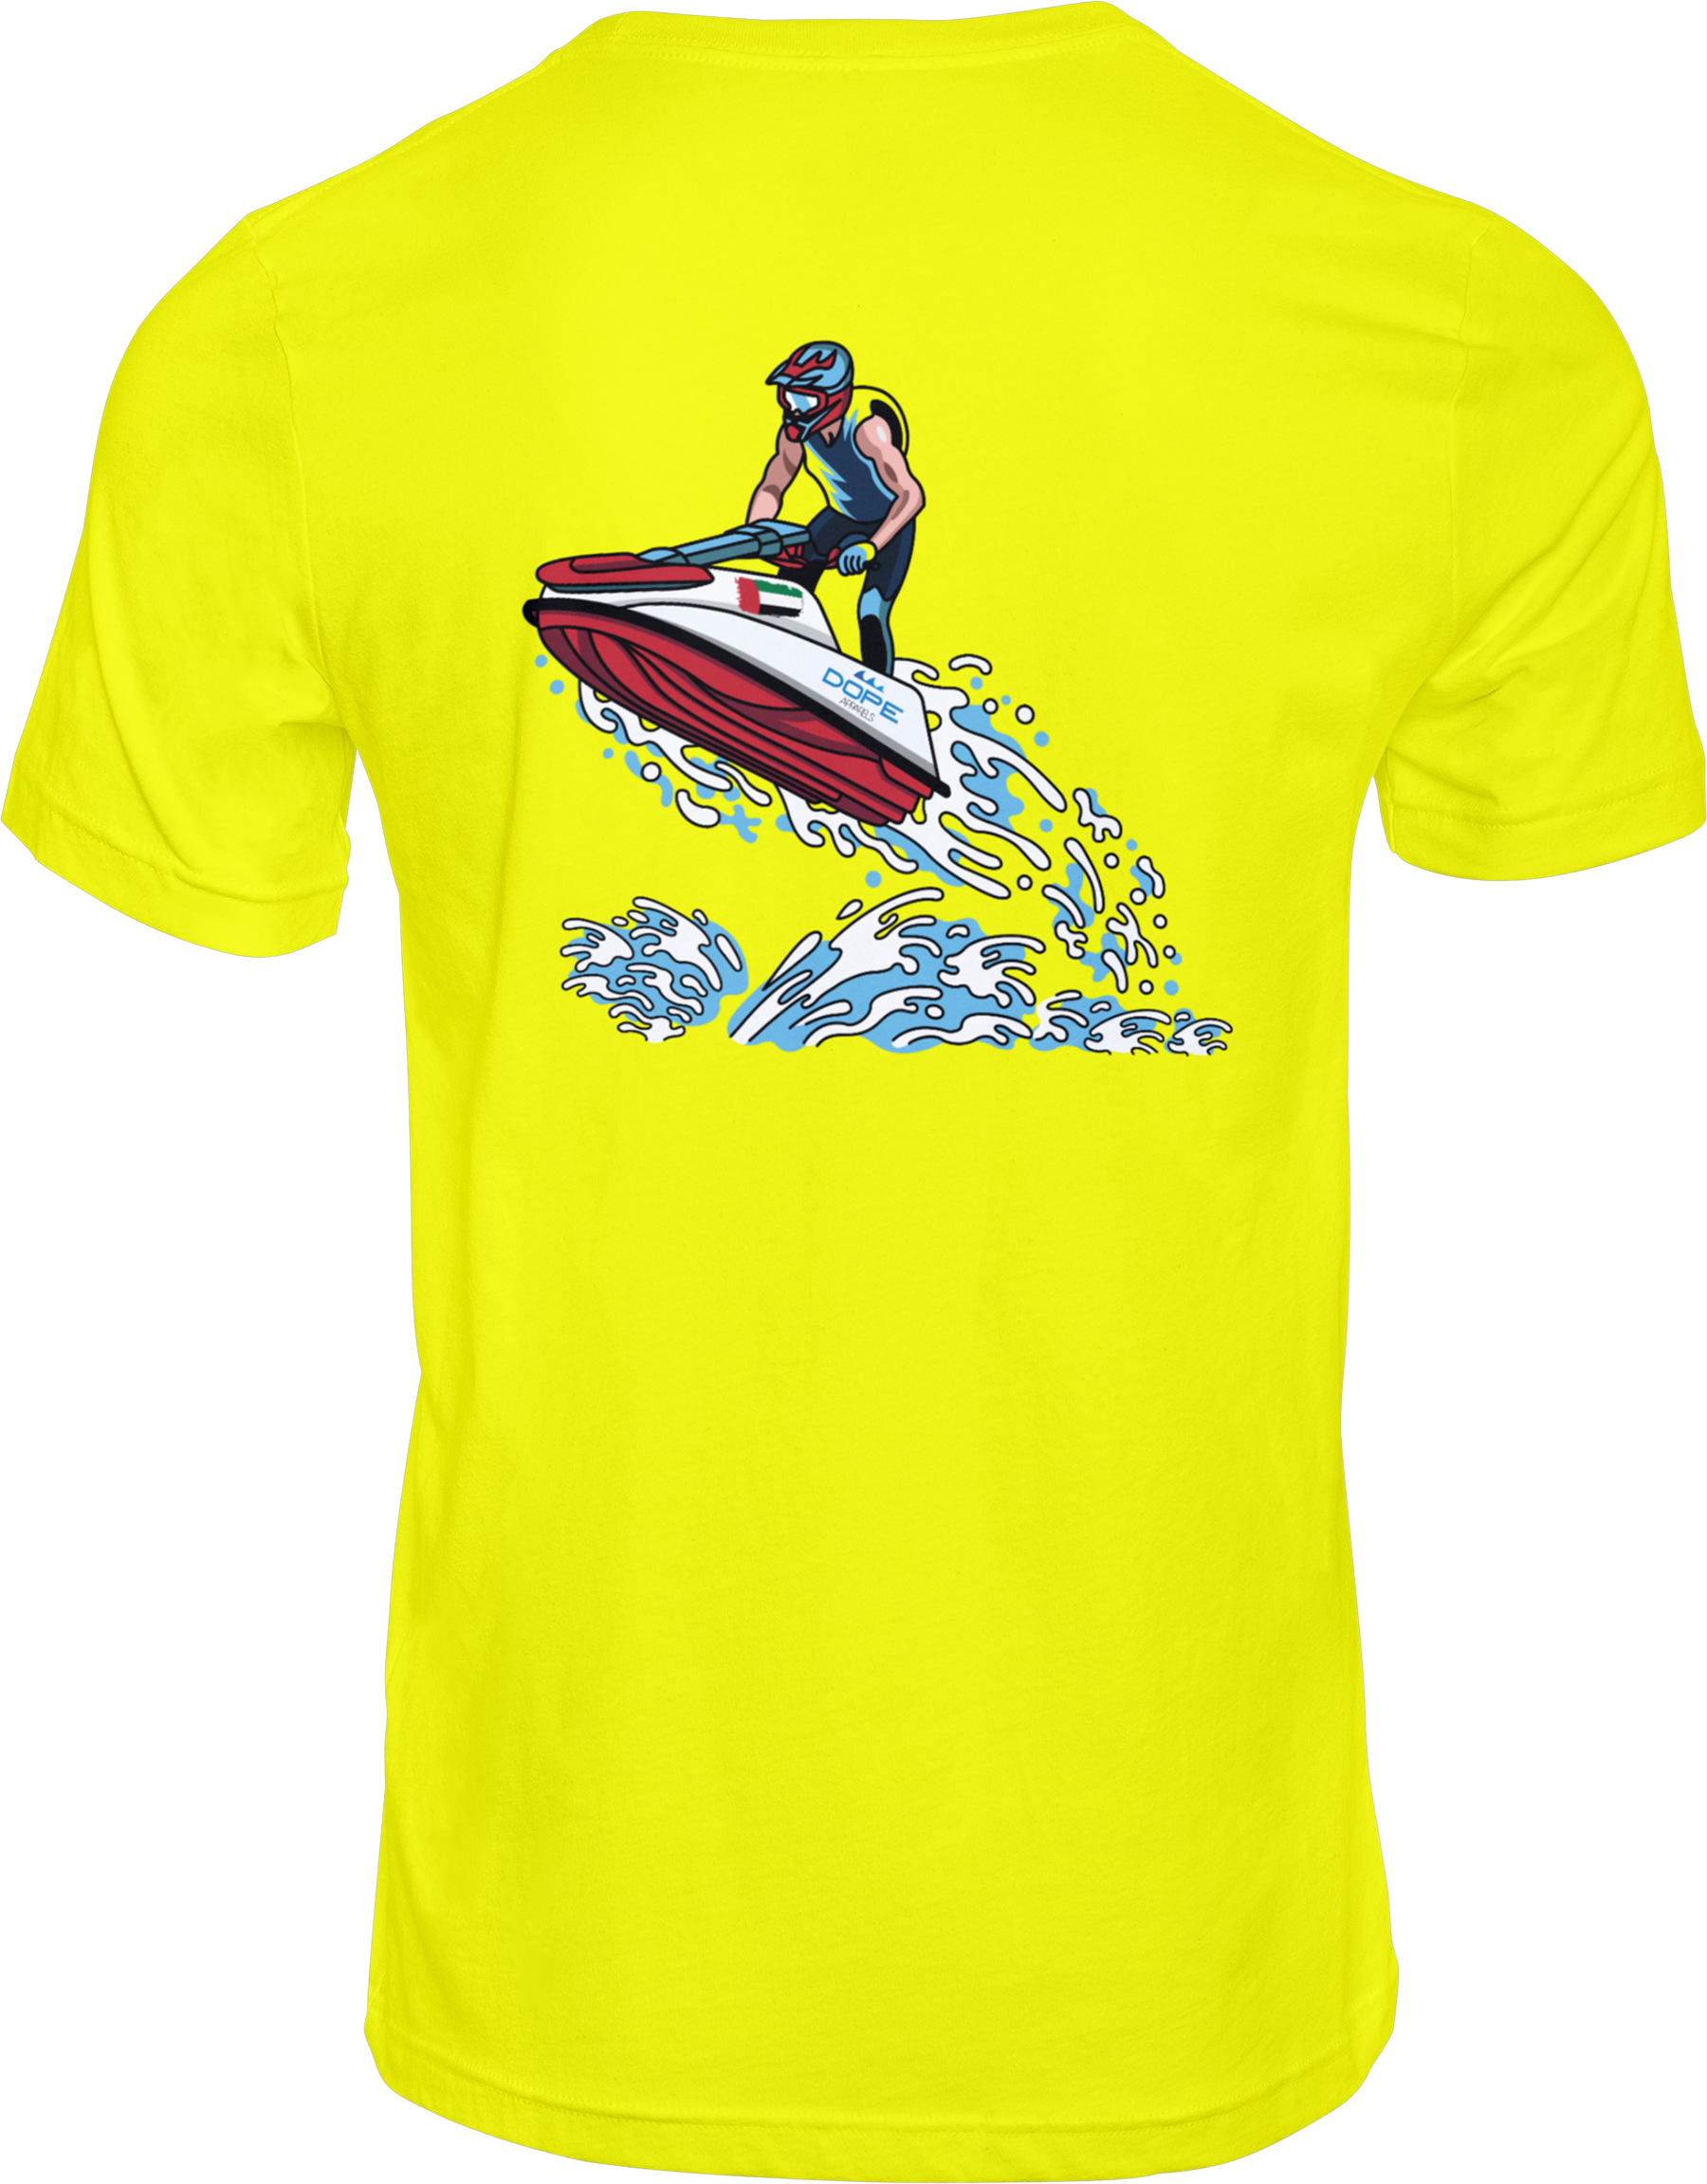 Jet Ski Accessories & Jetski Shirts Funny Shirt Jetskiing Jet Ski Accessory  for Men Throw Pillow, 16x16, Multicolor